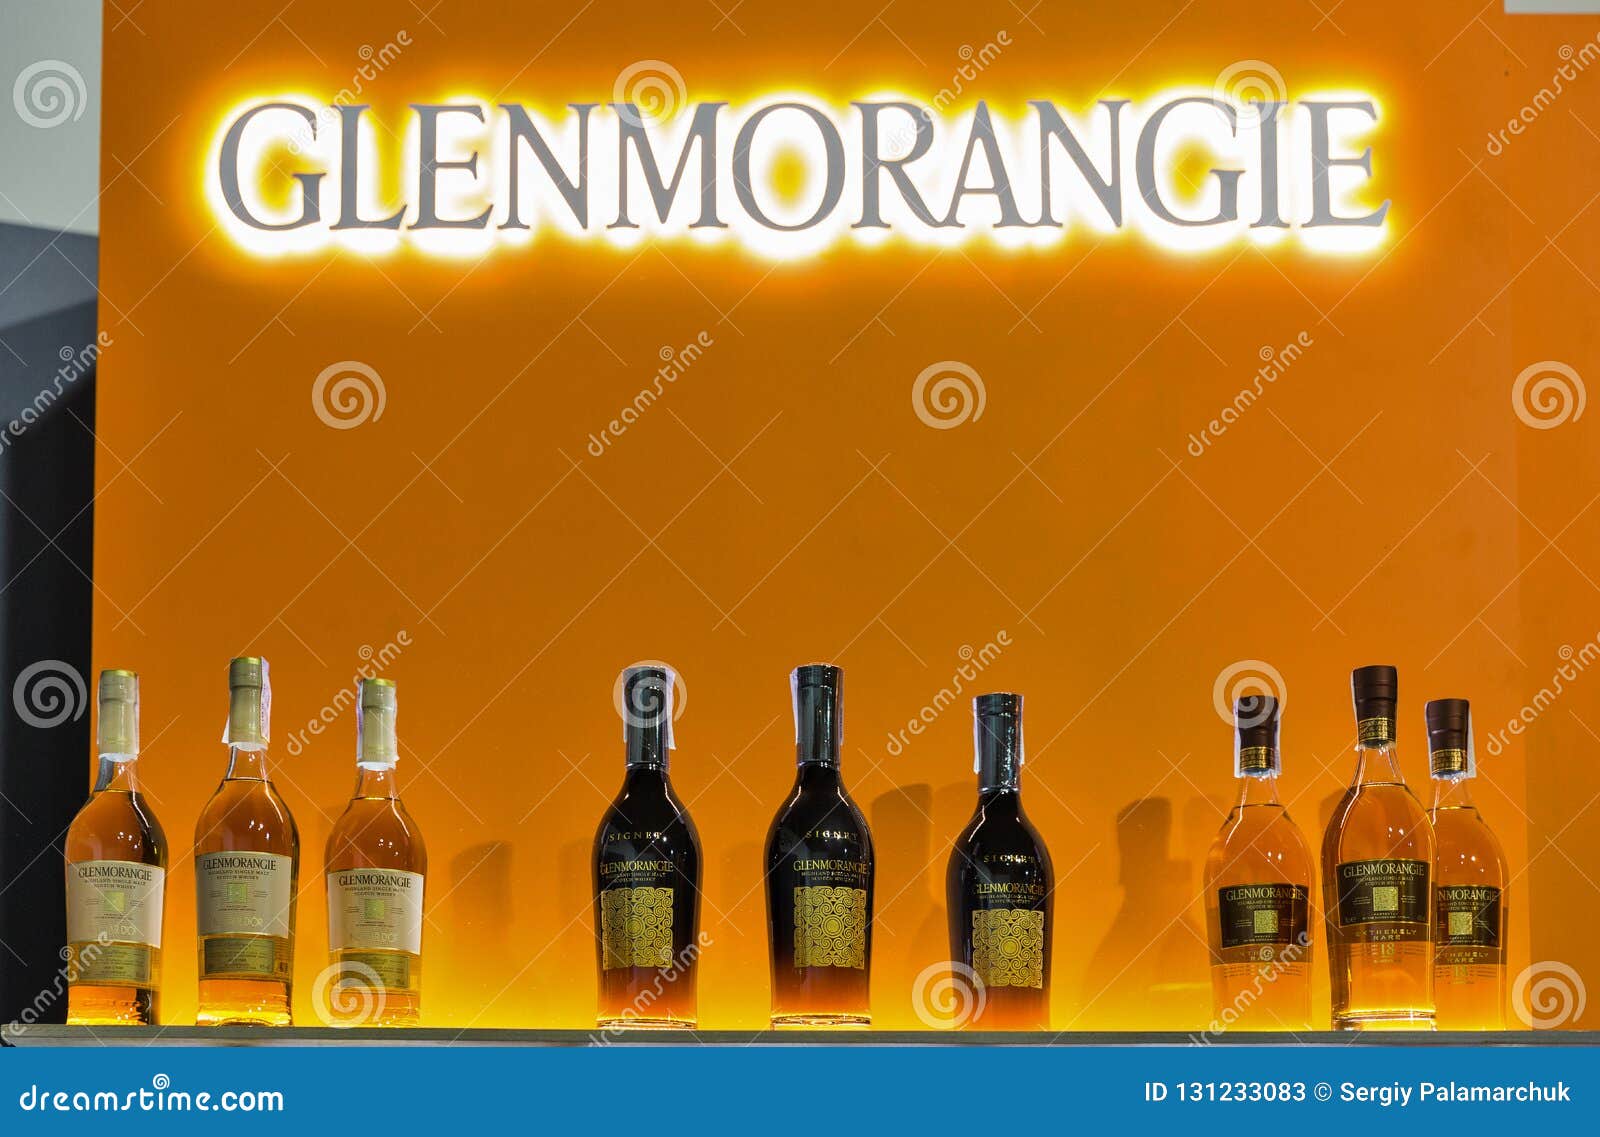 Free Download Glenmorangie Logo Vector from